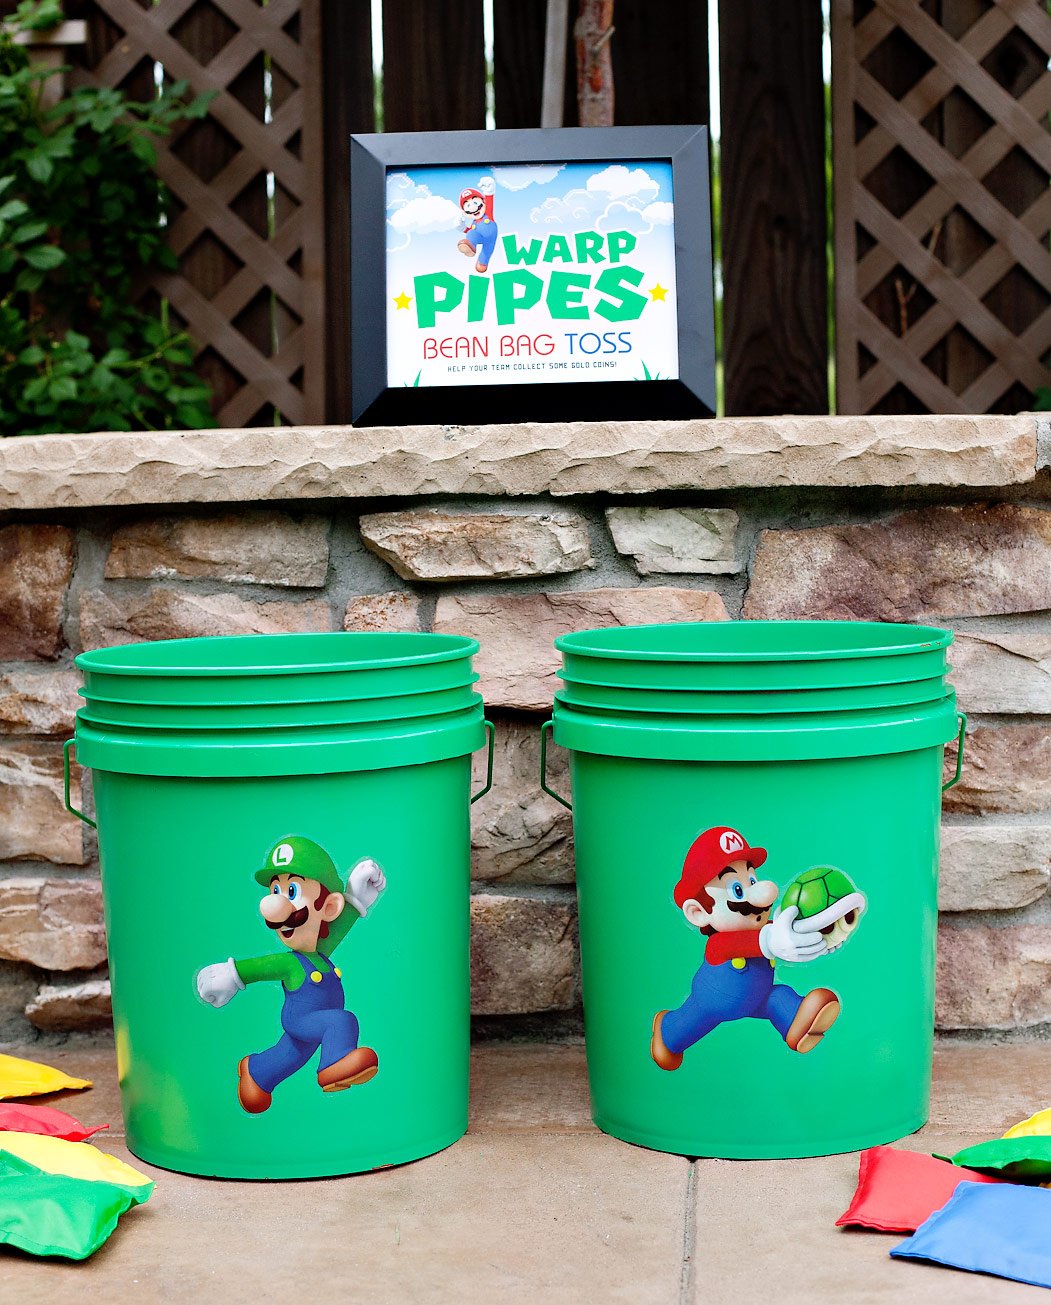 Mario Pipe Warp Bean Bag Toss